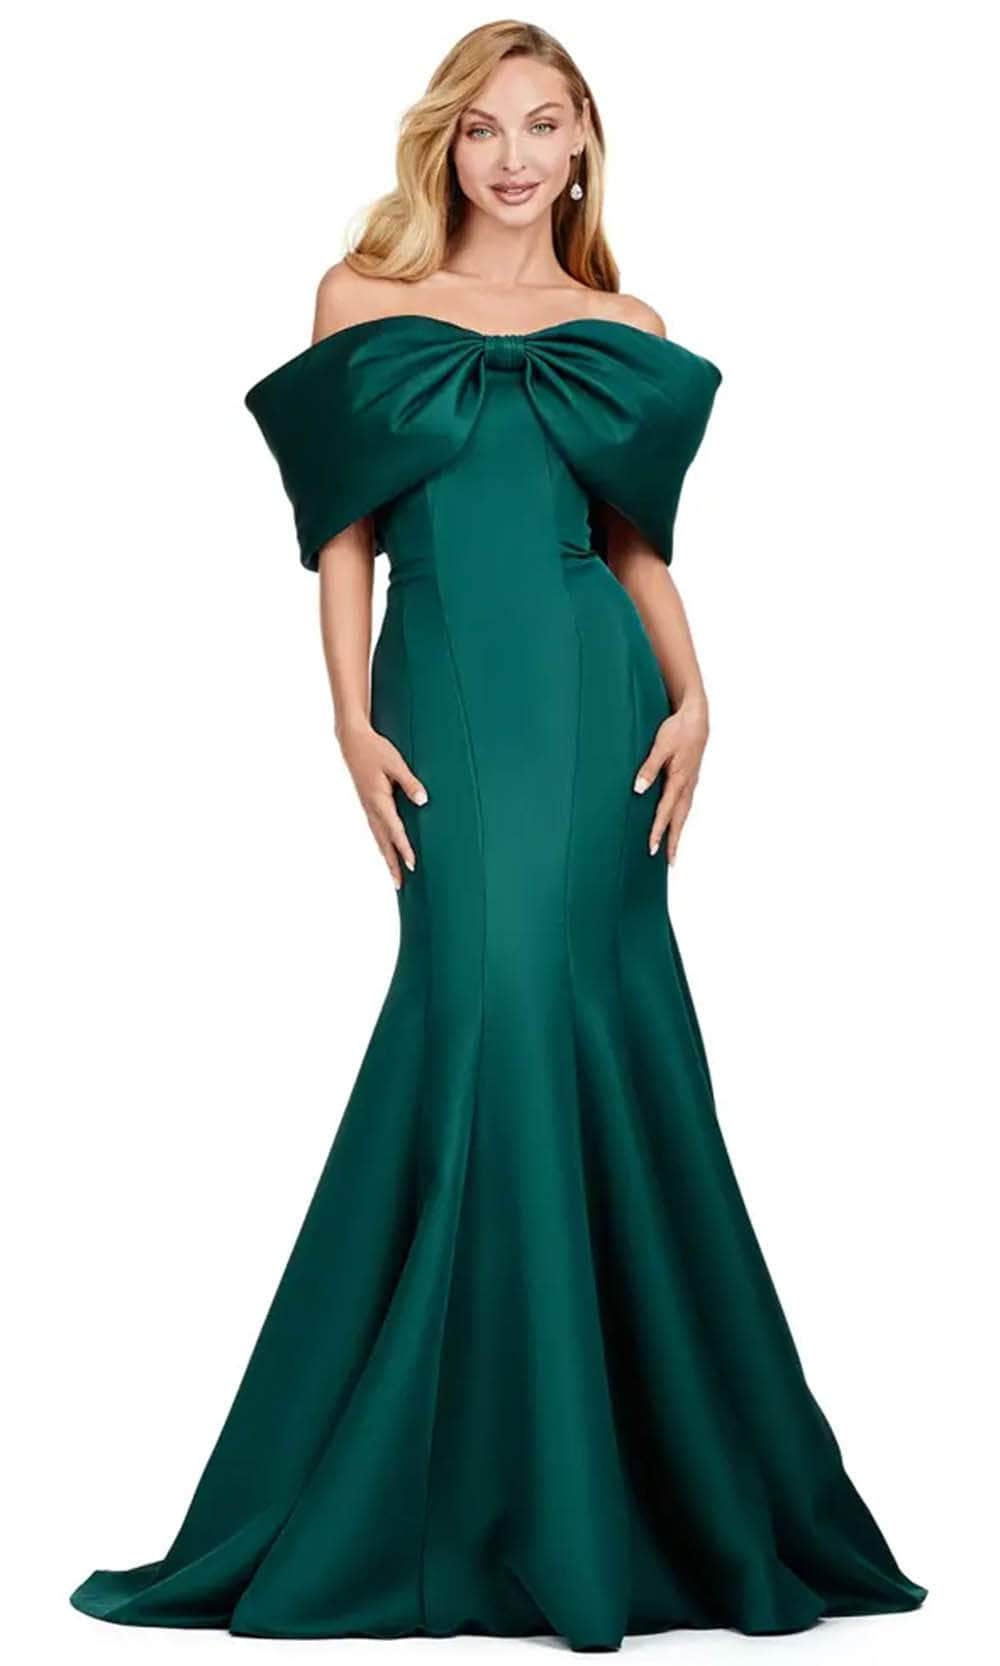 Ashley Lauren 11413 - Bow Accent Satin Mermaid Gown
